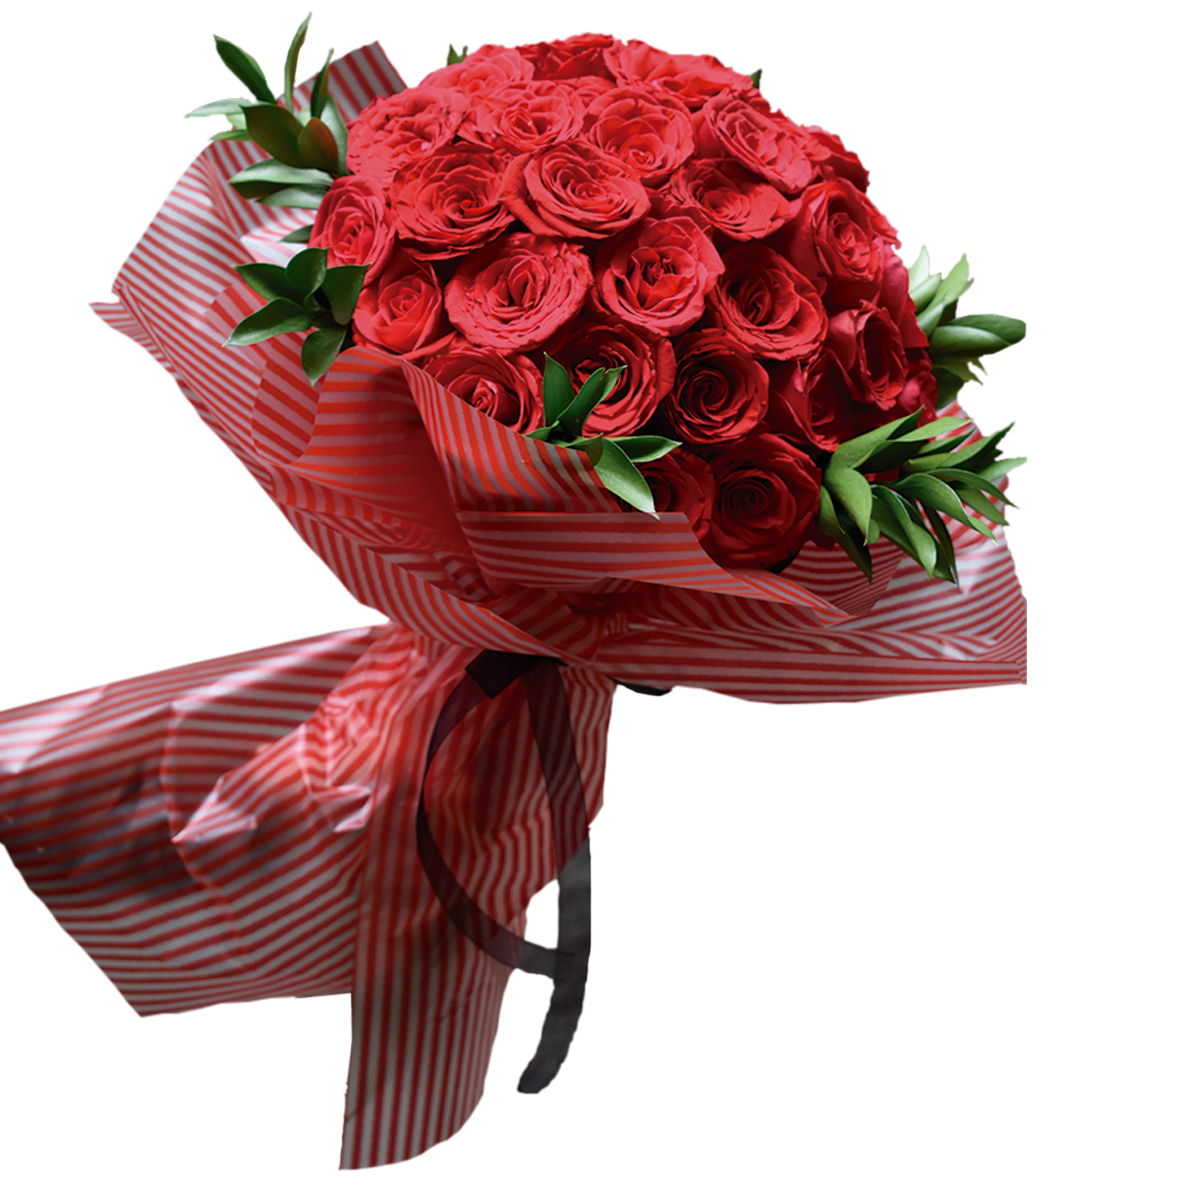 Ramo de 50 rosas rojas - Detalles a distancia | Envía flores a domicilio